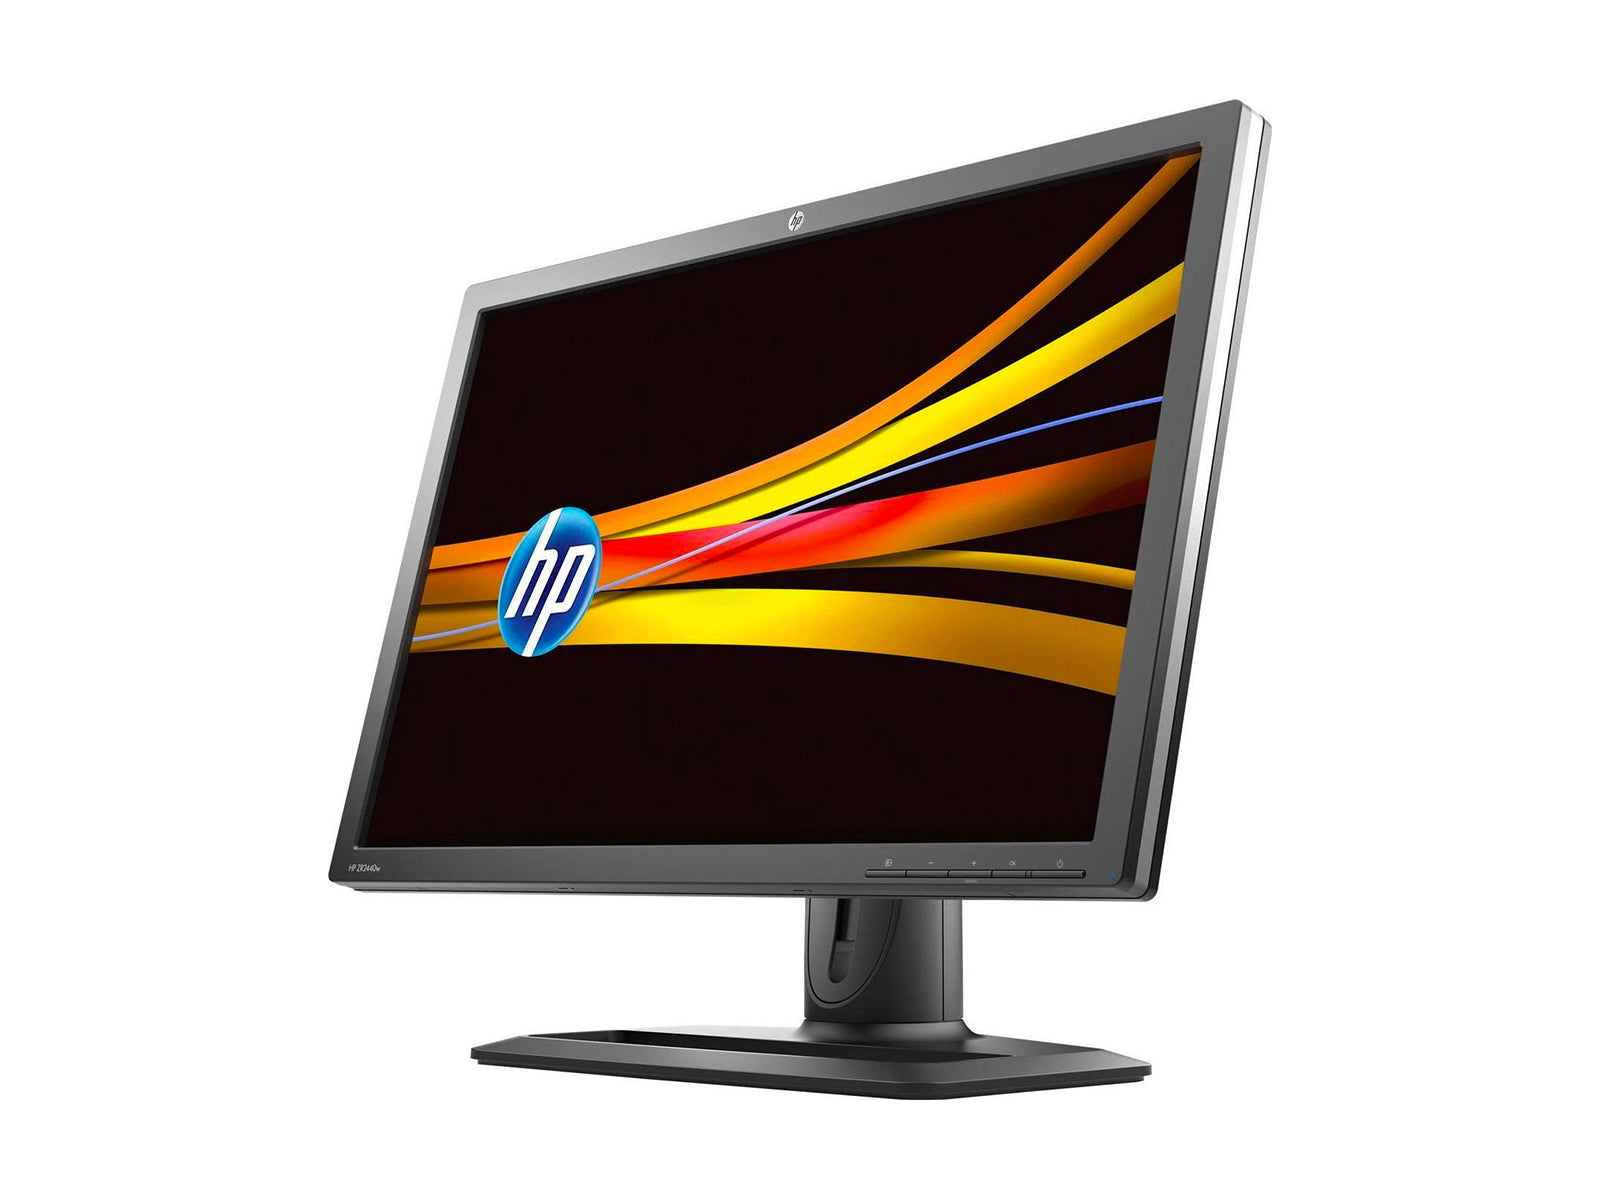 HP ZR2440w 24 インチ WUXGA 1920x1200 LED ディスプレイ モニター (XW477A4#ABA) Monitors.com